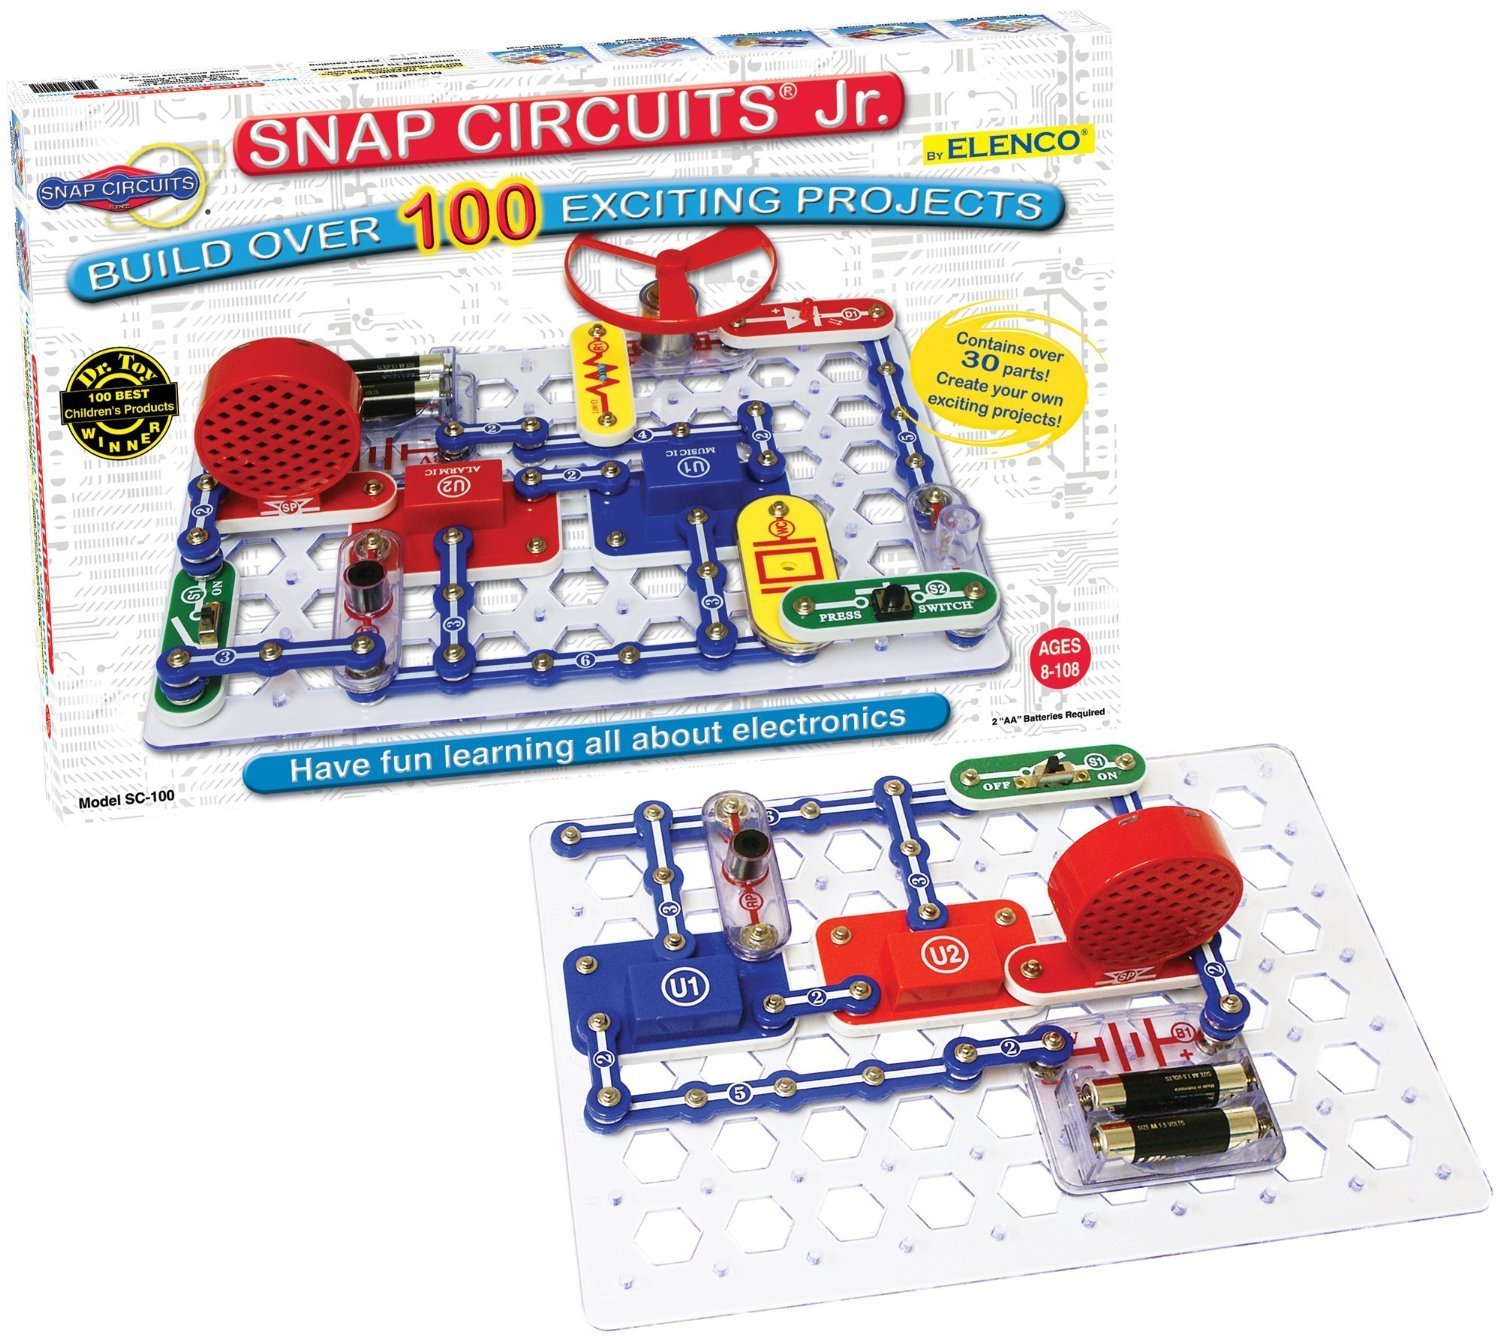 Snap Circuits Jr. SC-100 Electronics Discovery Kit – Just $18.99!